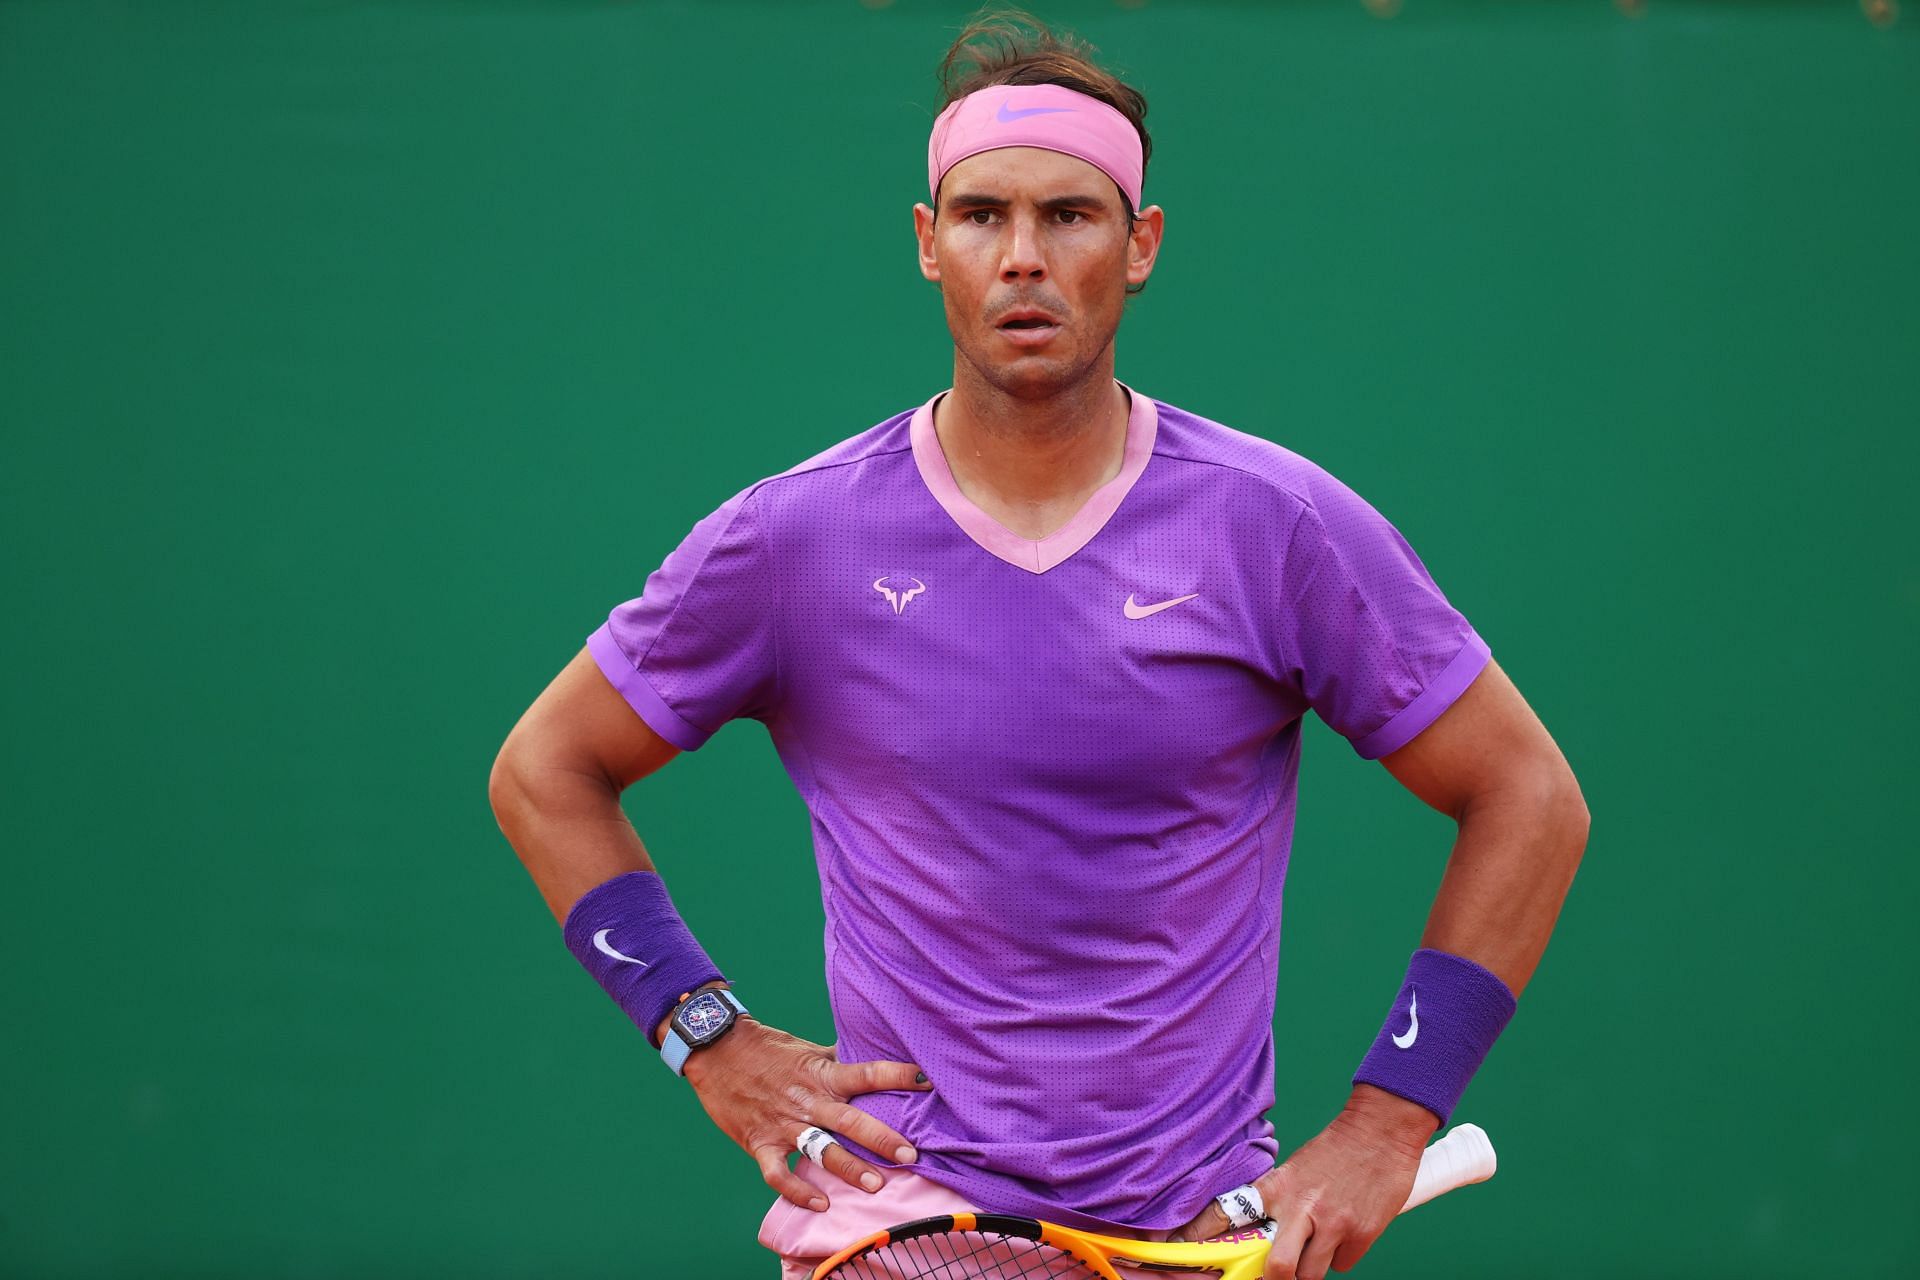 Rafael Nadal at the Monte Carlo Masters 2021